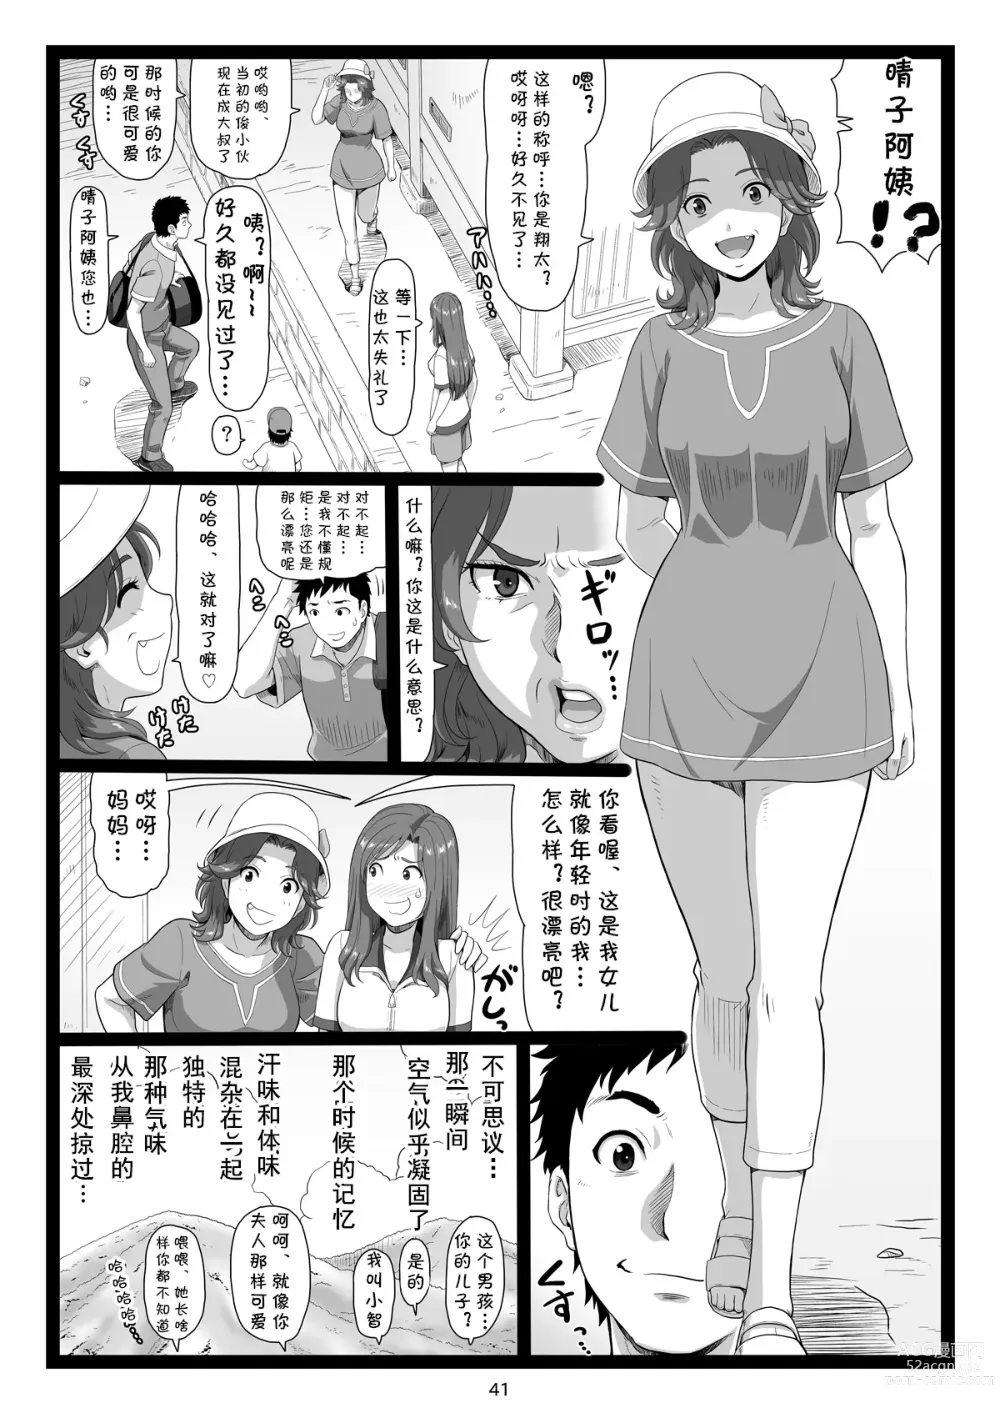 Page 41 of doujinshi Natsuyasumi no Omoide Gekan